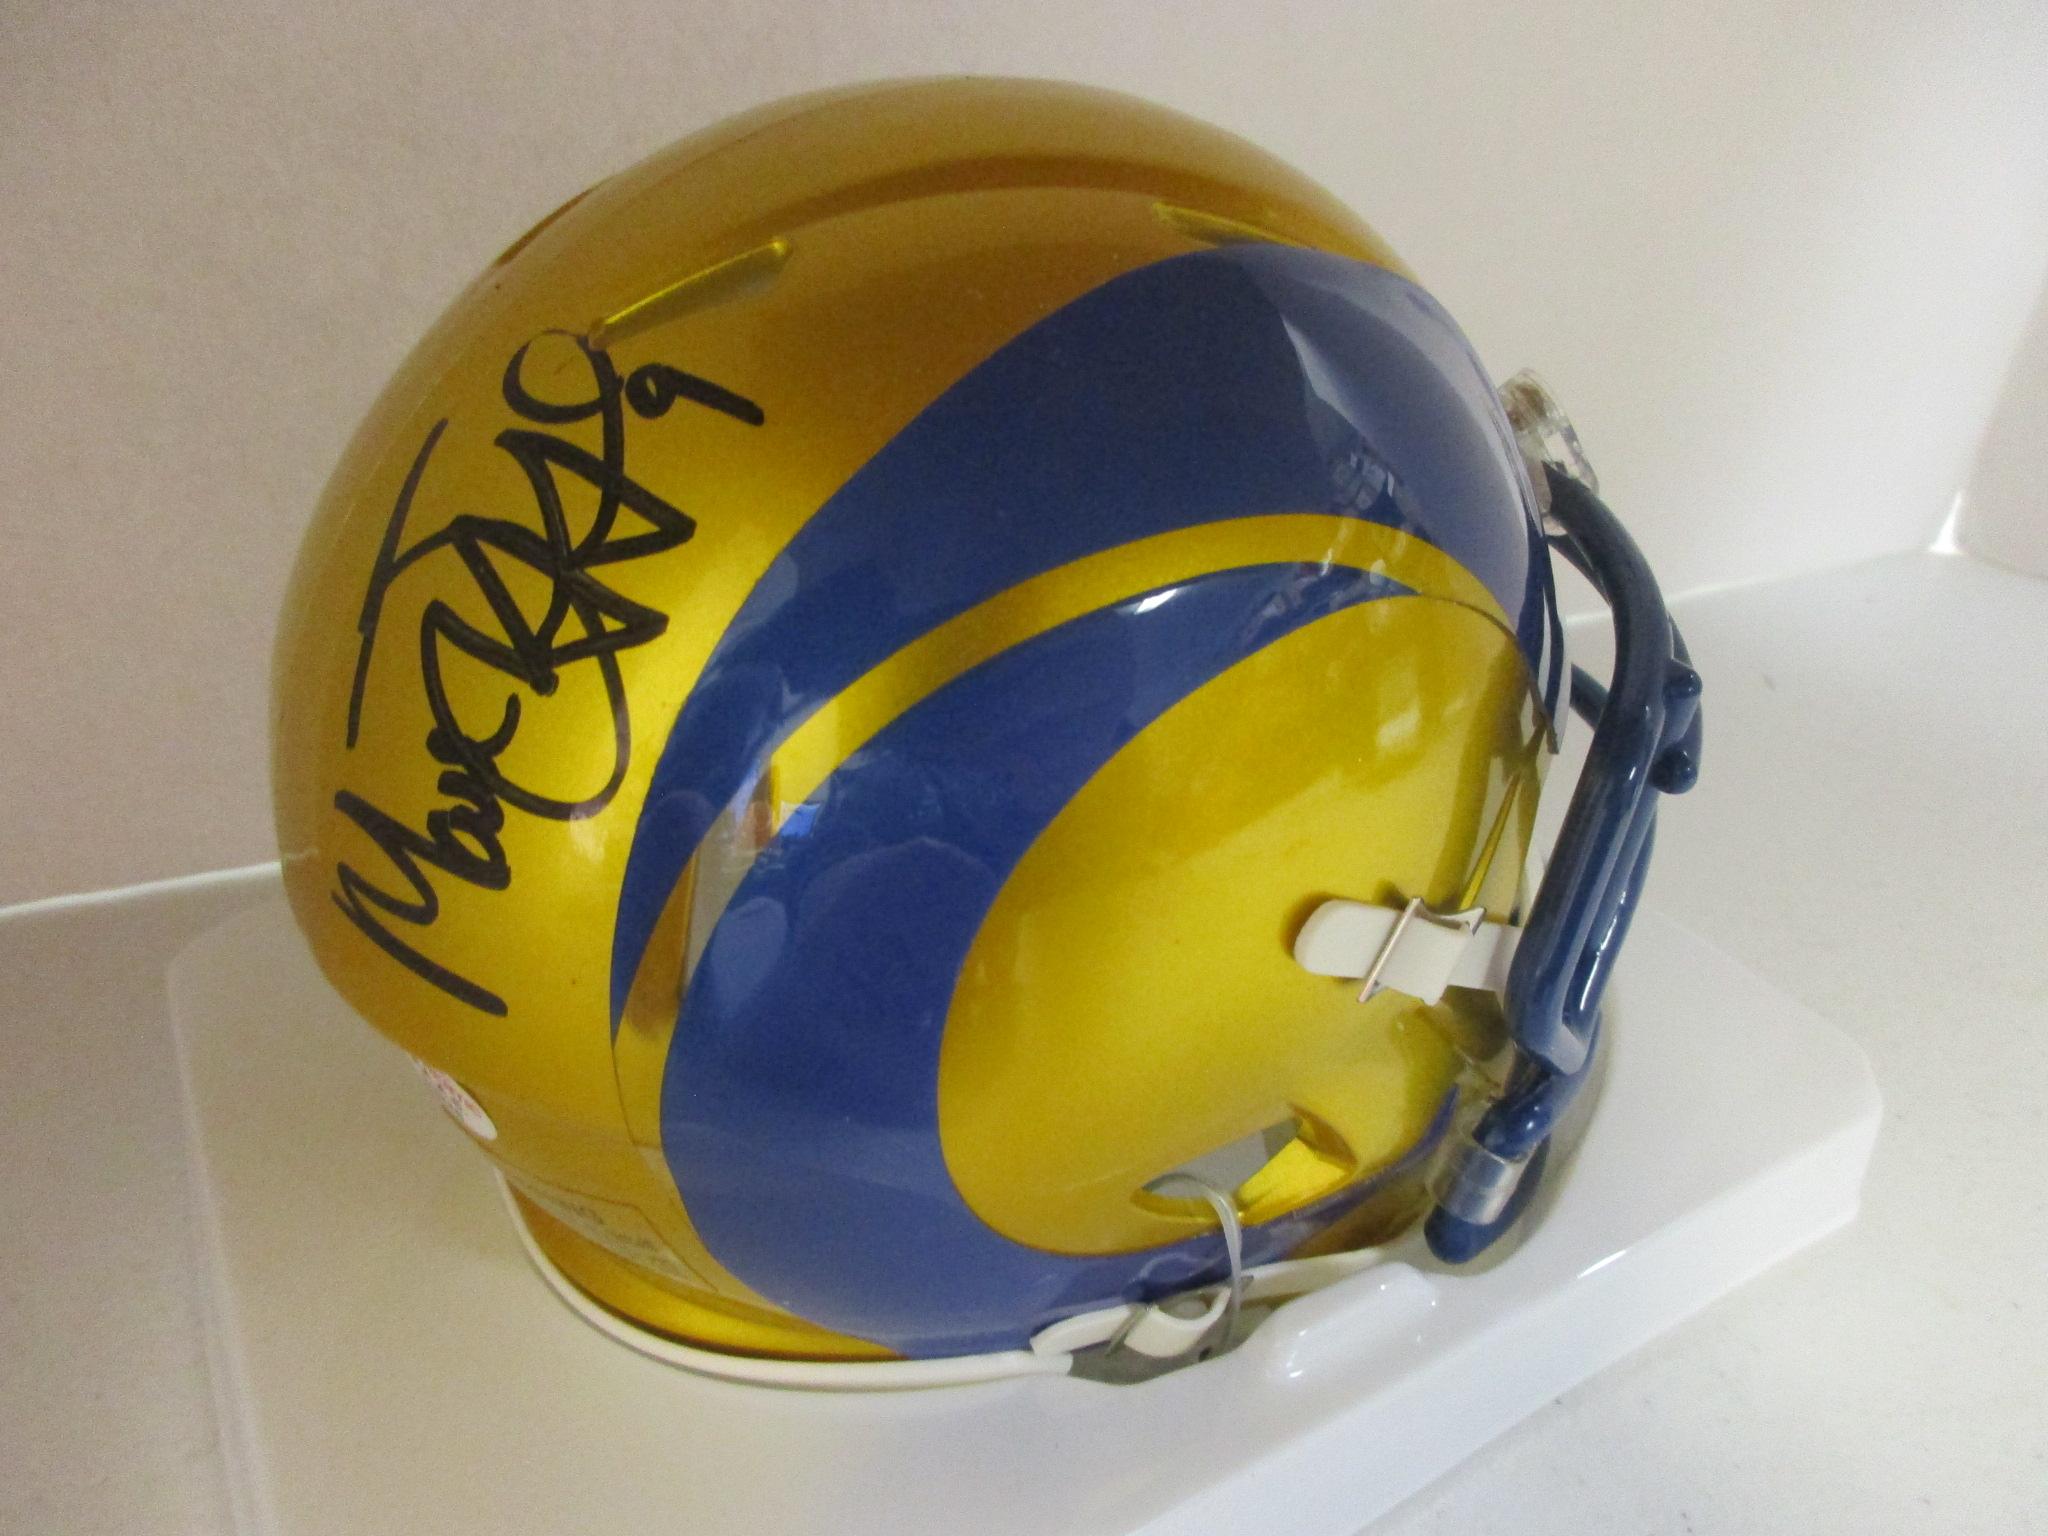 Matthew Stafford of the LA Rams signed autographed football mini helmet PAAS COA 945